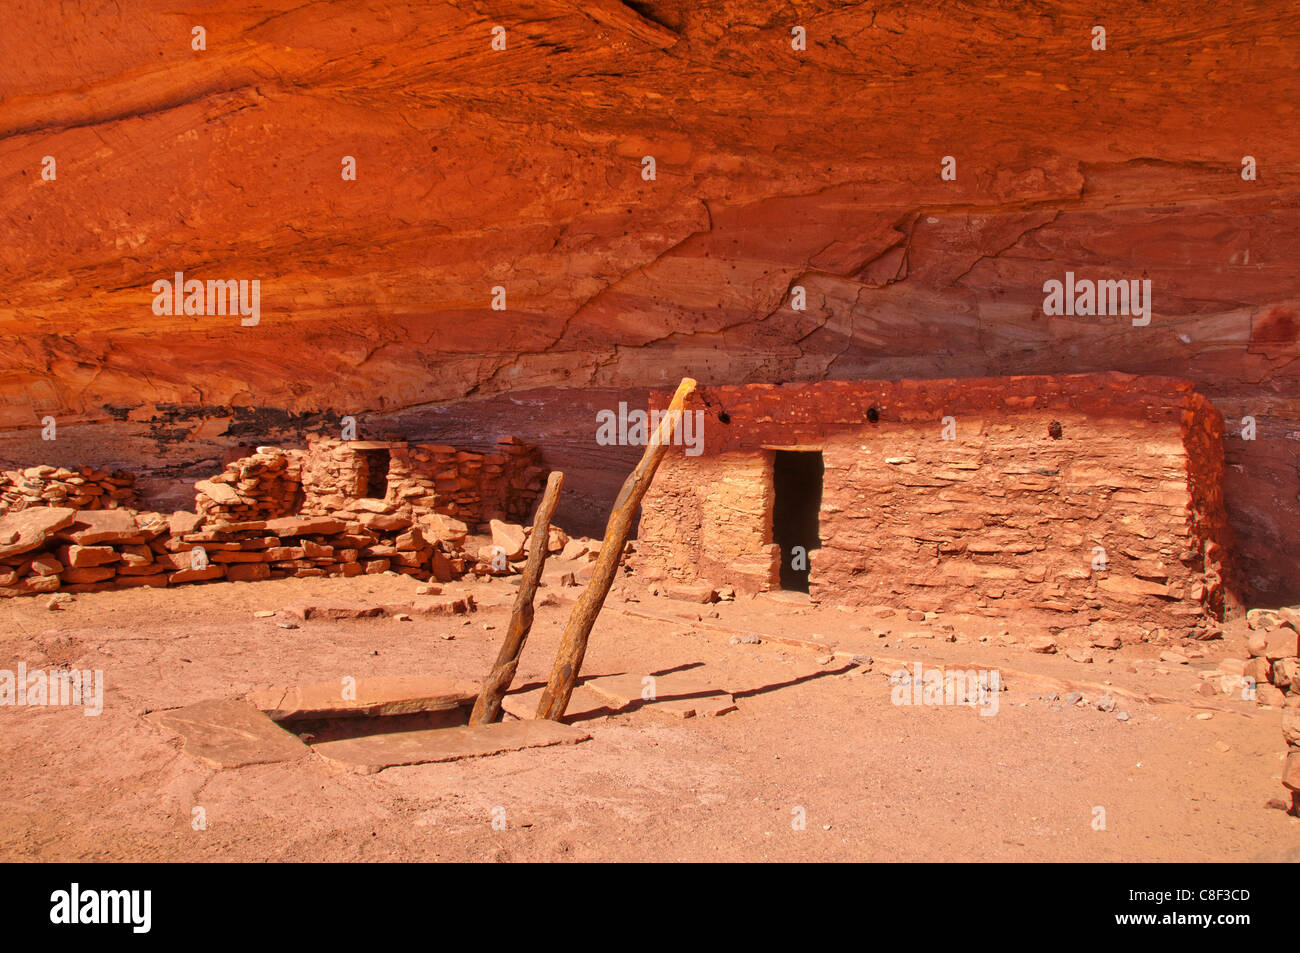 Anasazi, Cliff dwellings, Perfect Kiva, ruin, Bullet Canyon, Grand Gulch Primitive Area, Cedar Mesa, Colorado Plateau, Utah, USA Stock Photo